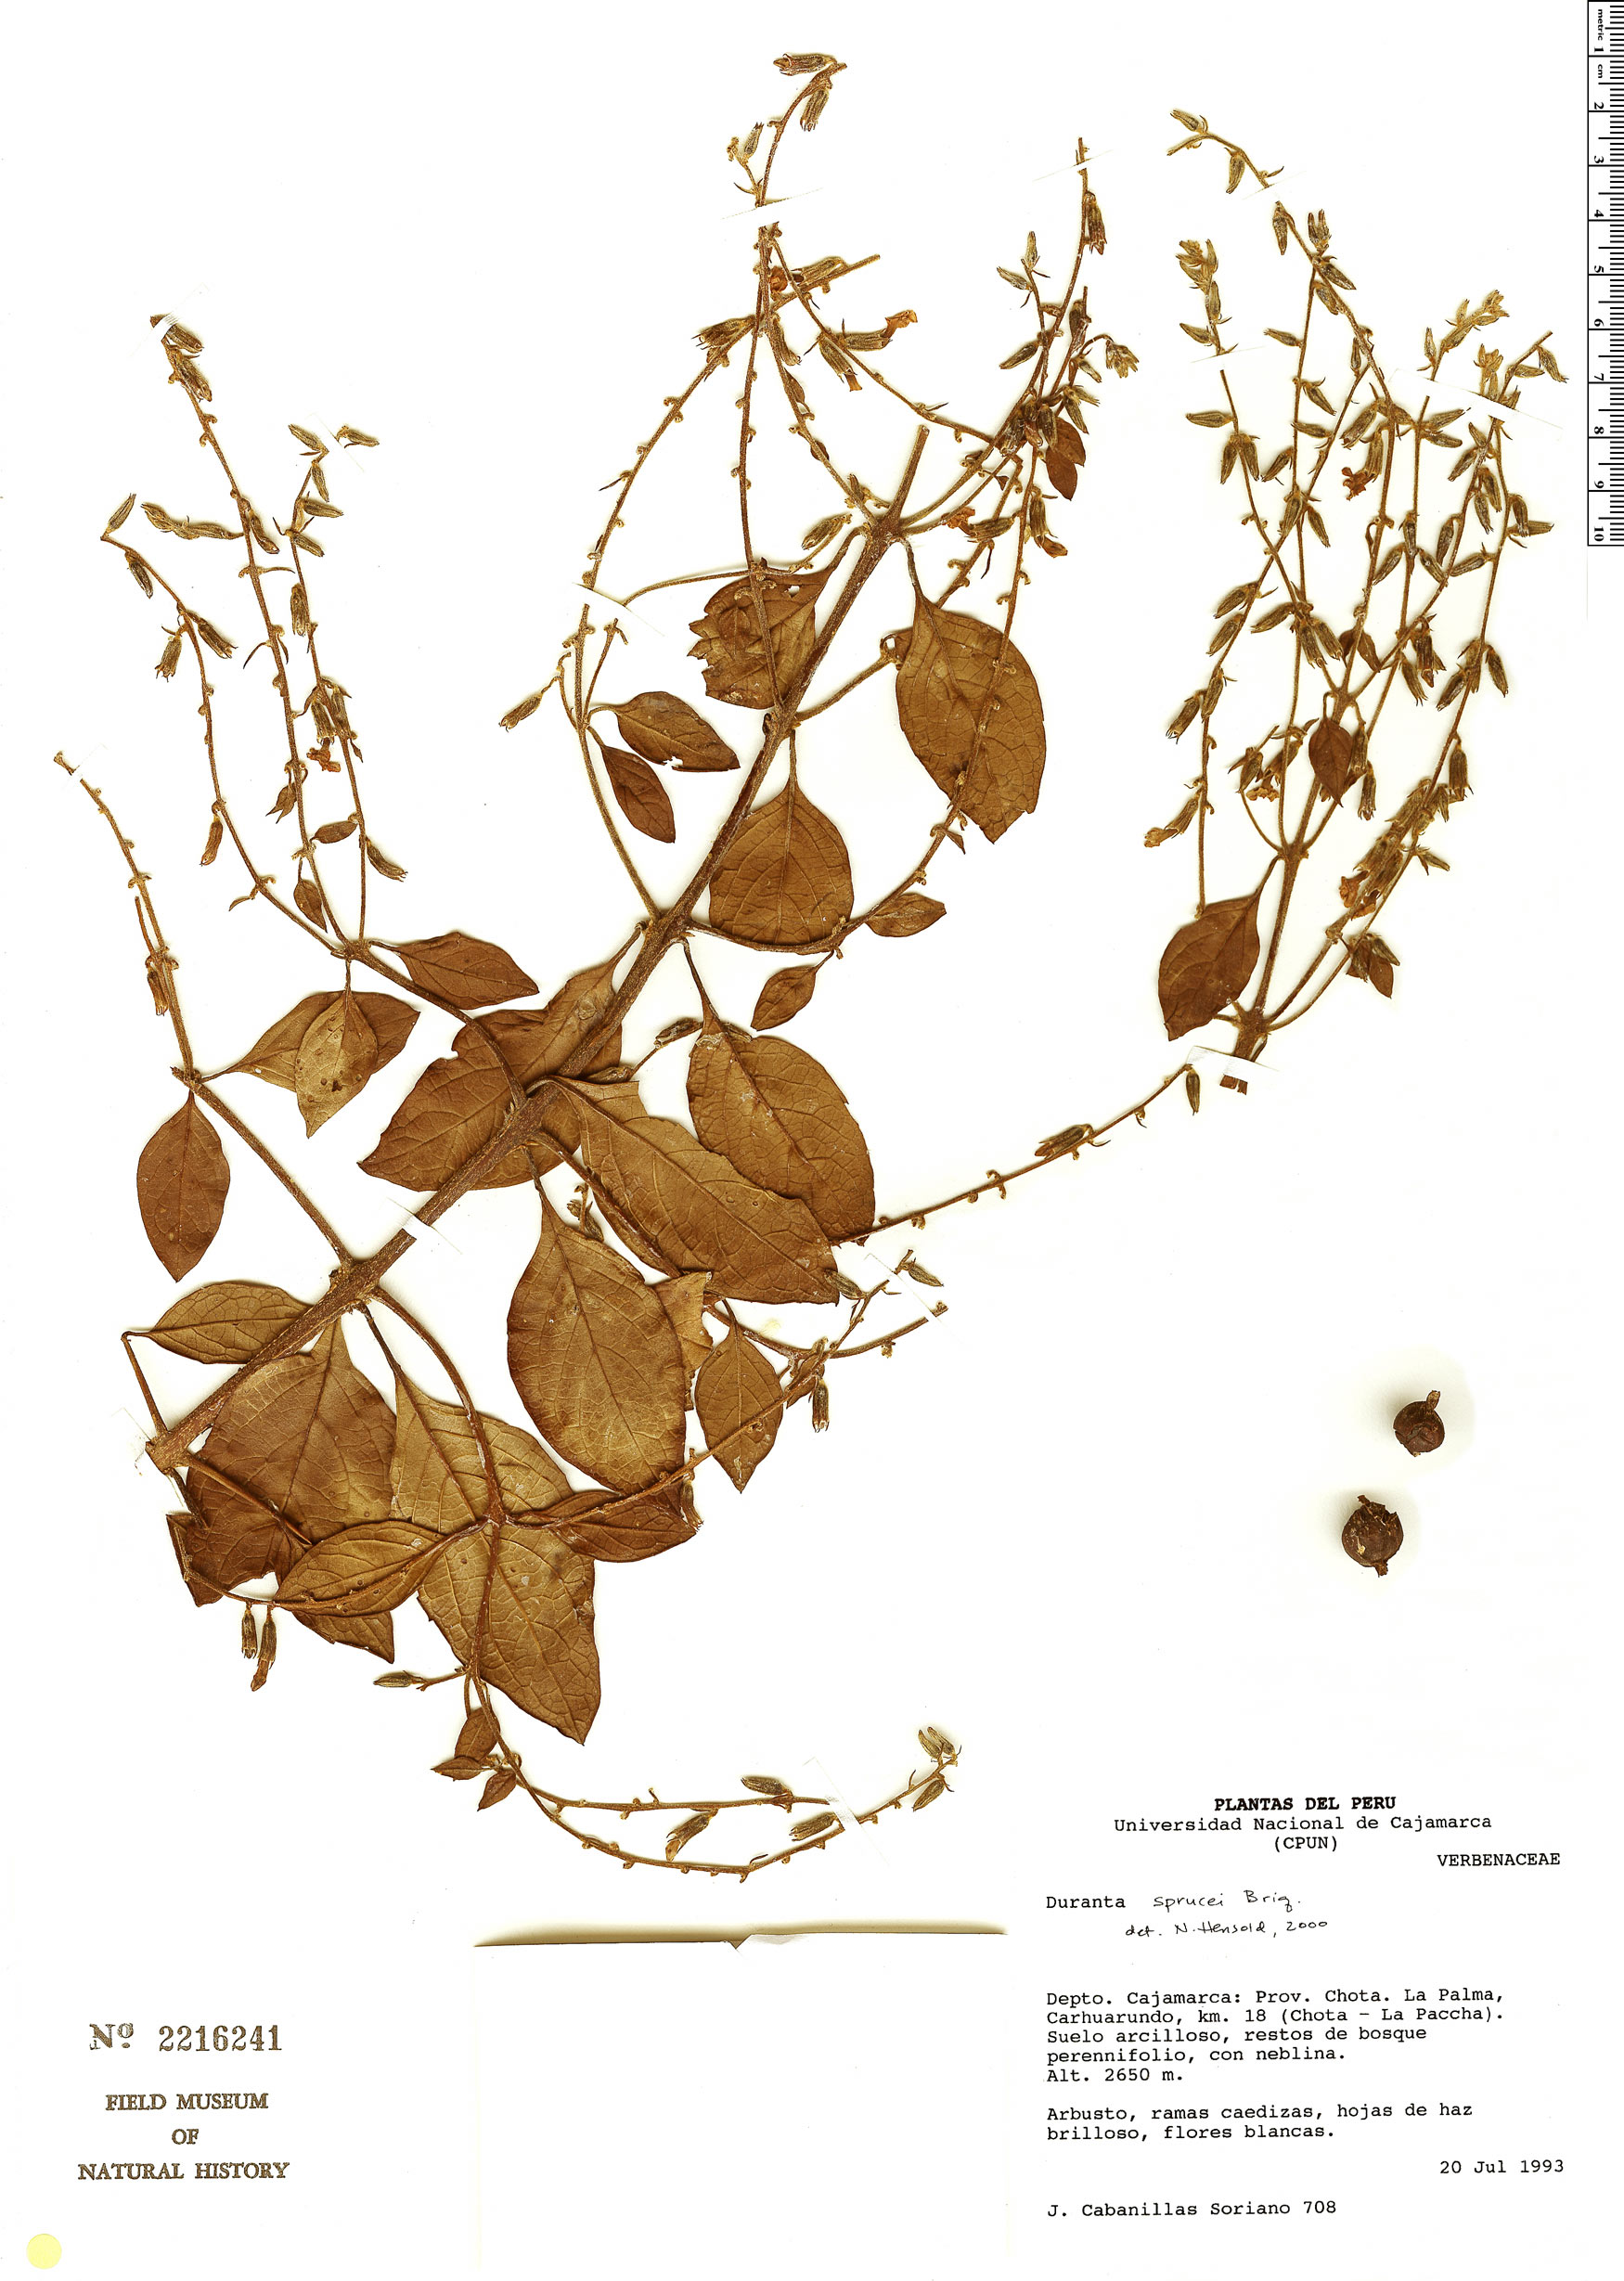 Duranta ssp. - New species